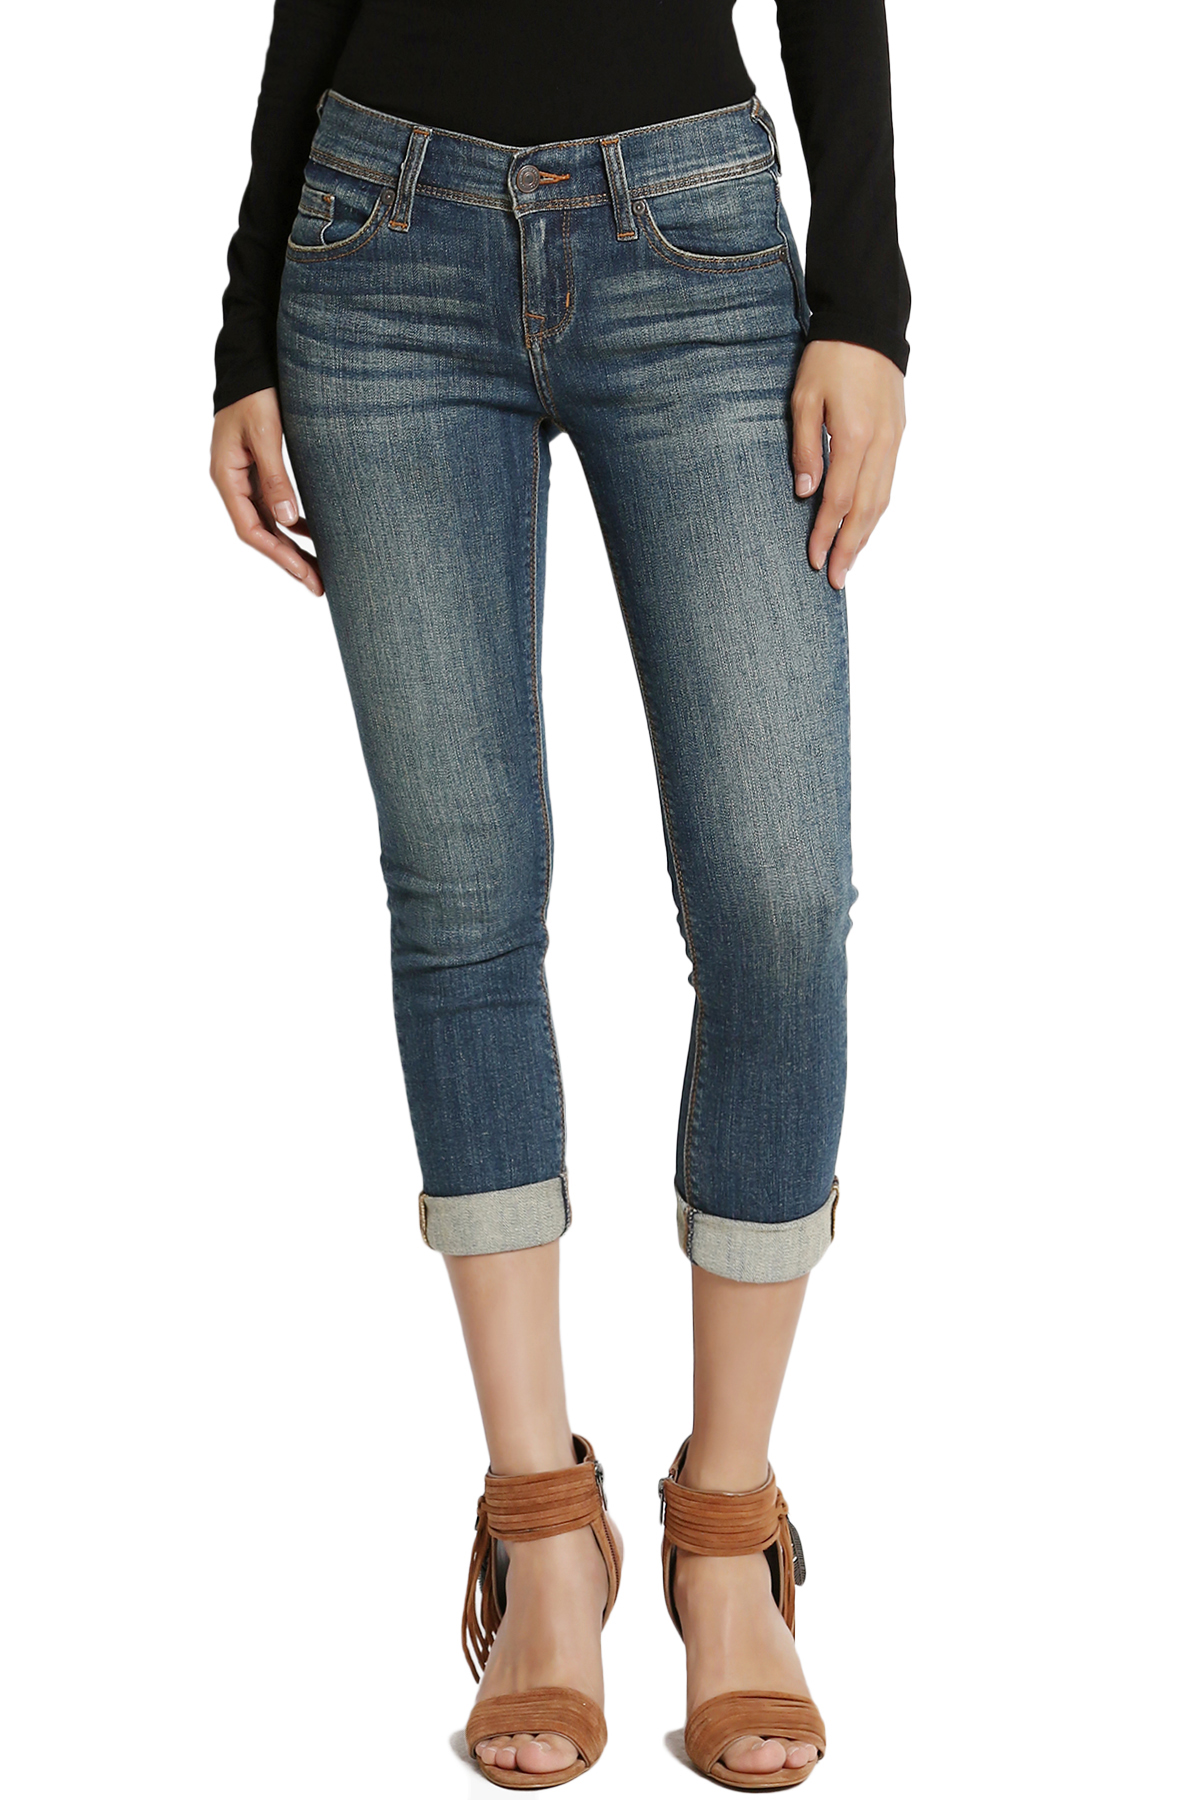 TheMogan Women's Petite Dark Blue Wash Stretchy Denim Low Rise Crop Skinny Jeans